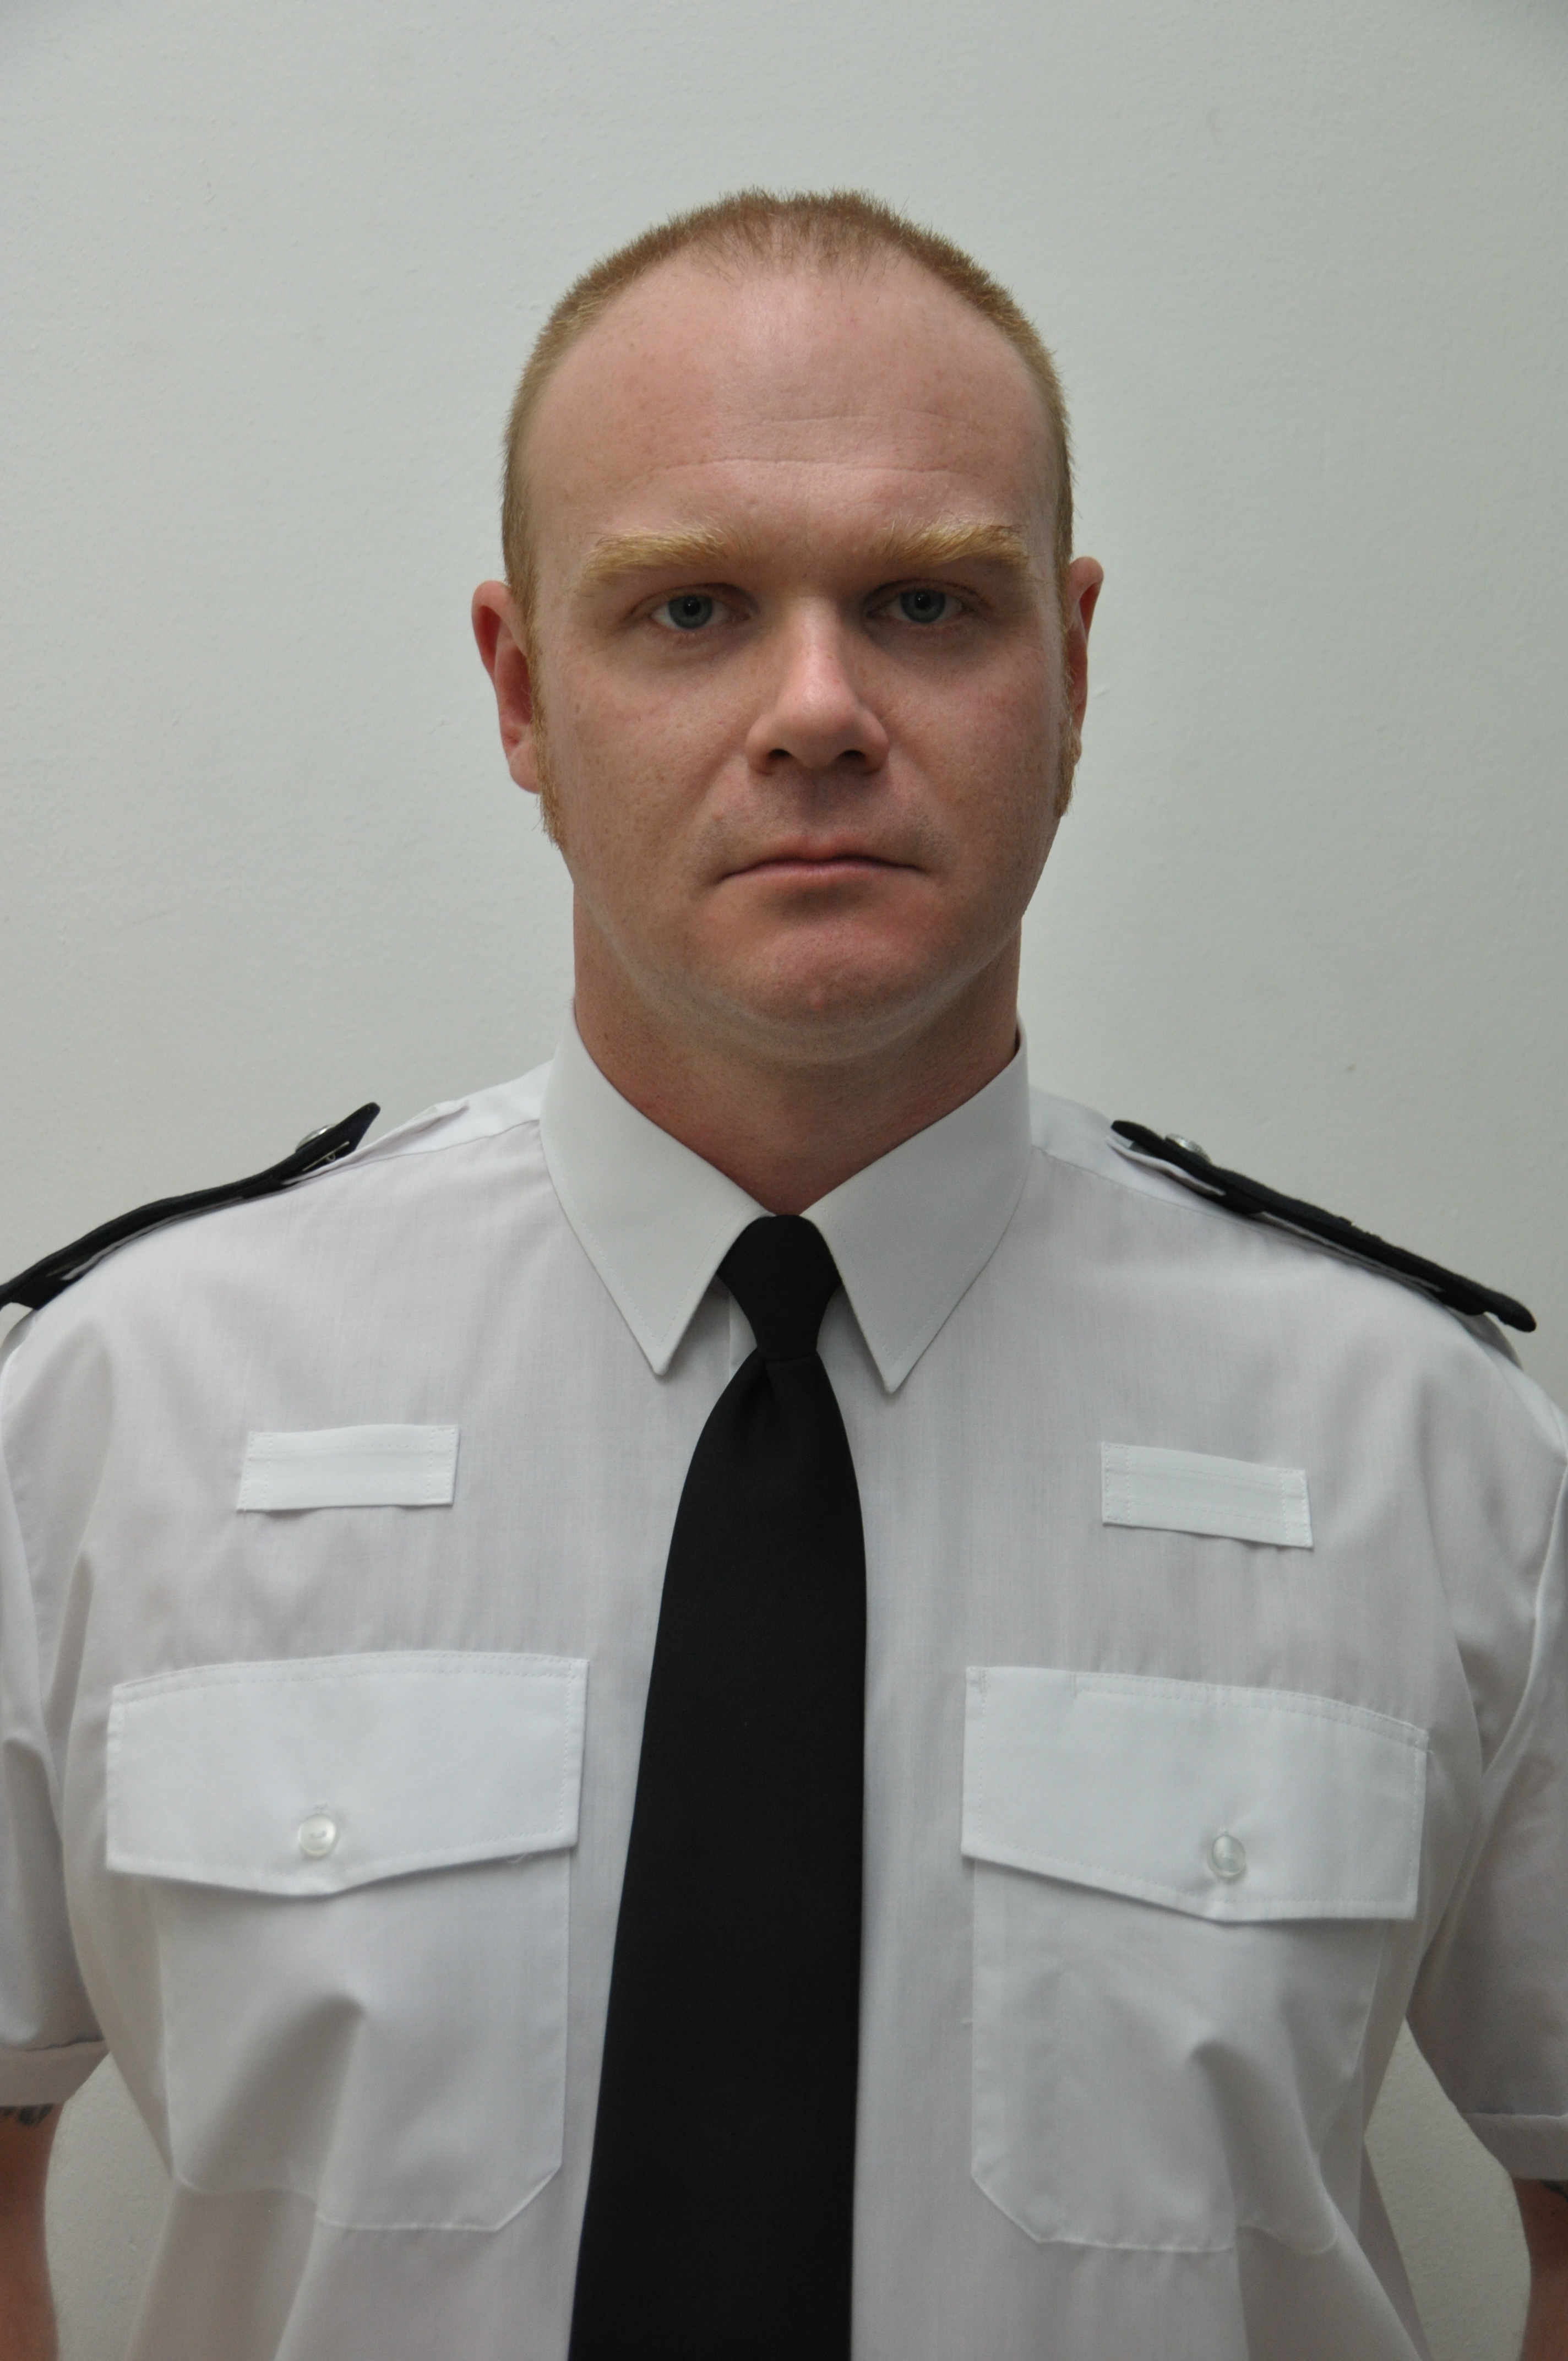 Sergeant Stewart Finegan